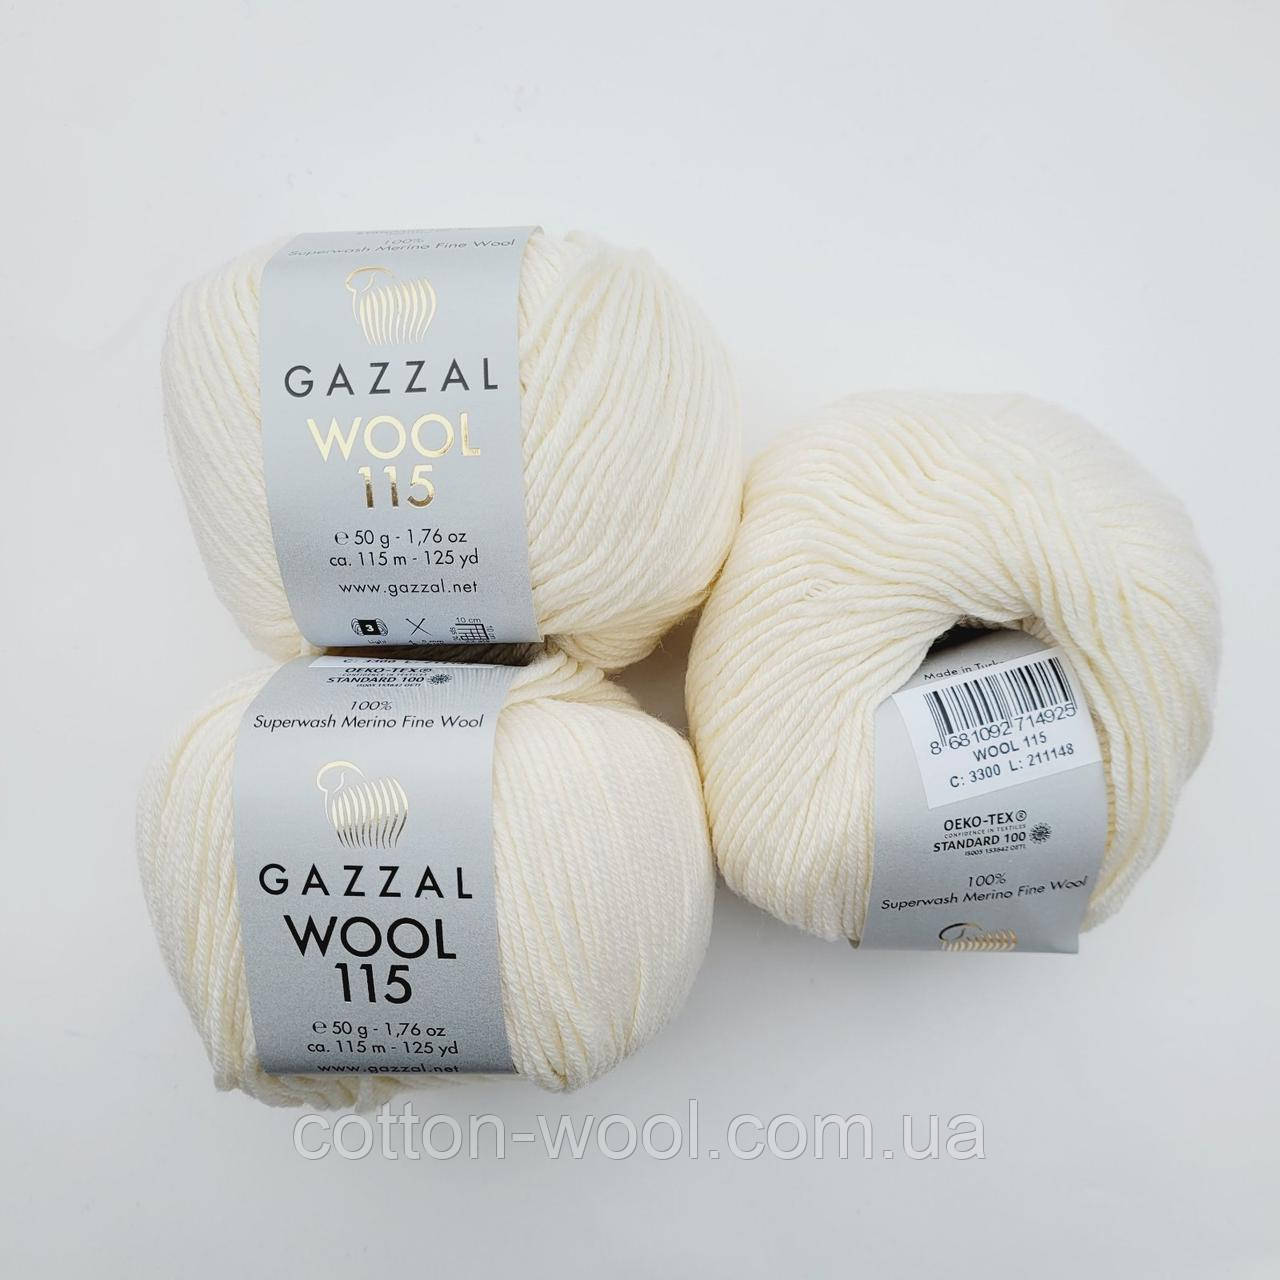 Gazzal Wool 115 (Газал Вул 115) 3300 100% Superwash Merino Fine Wool